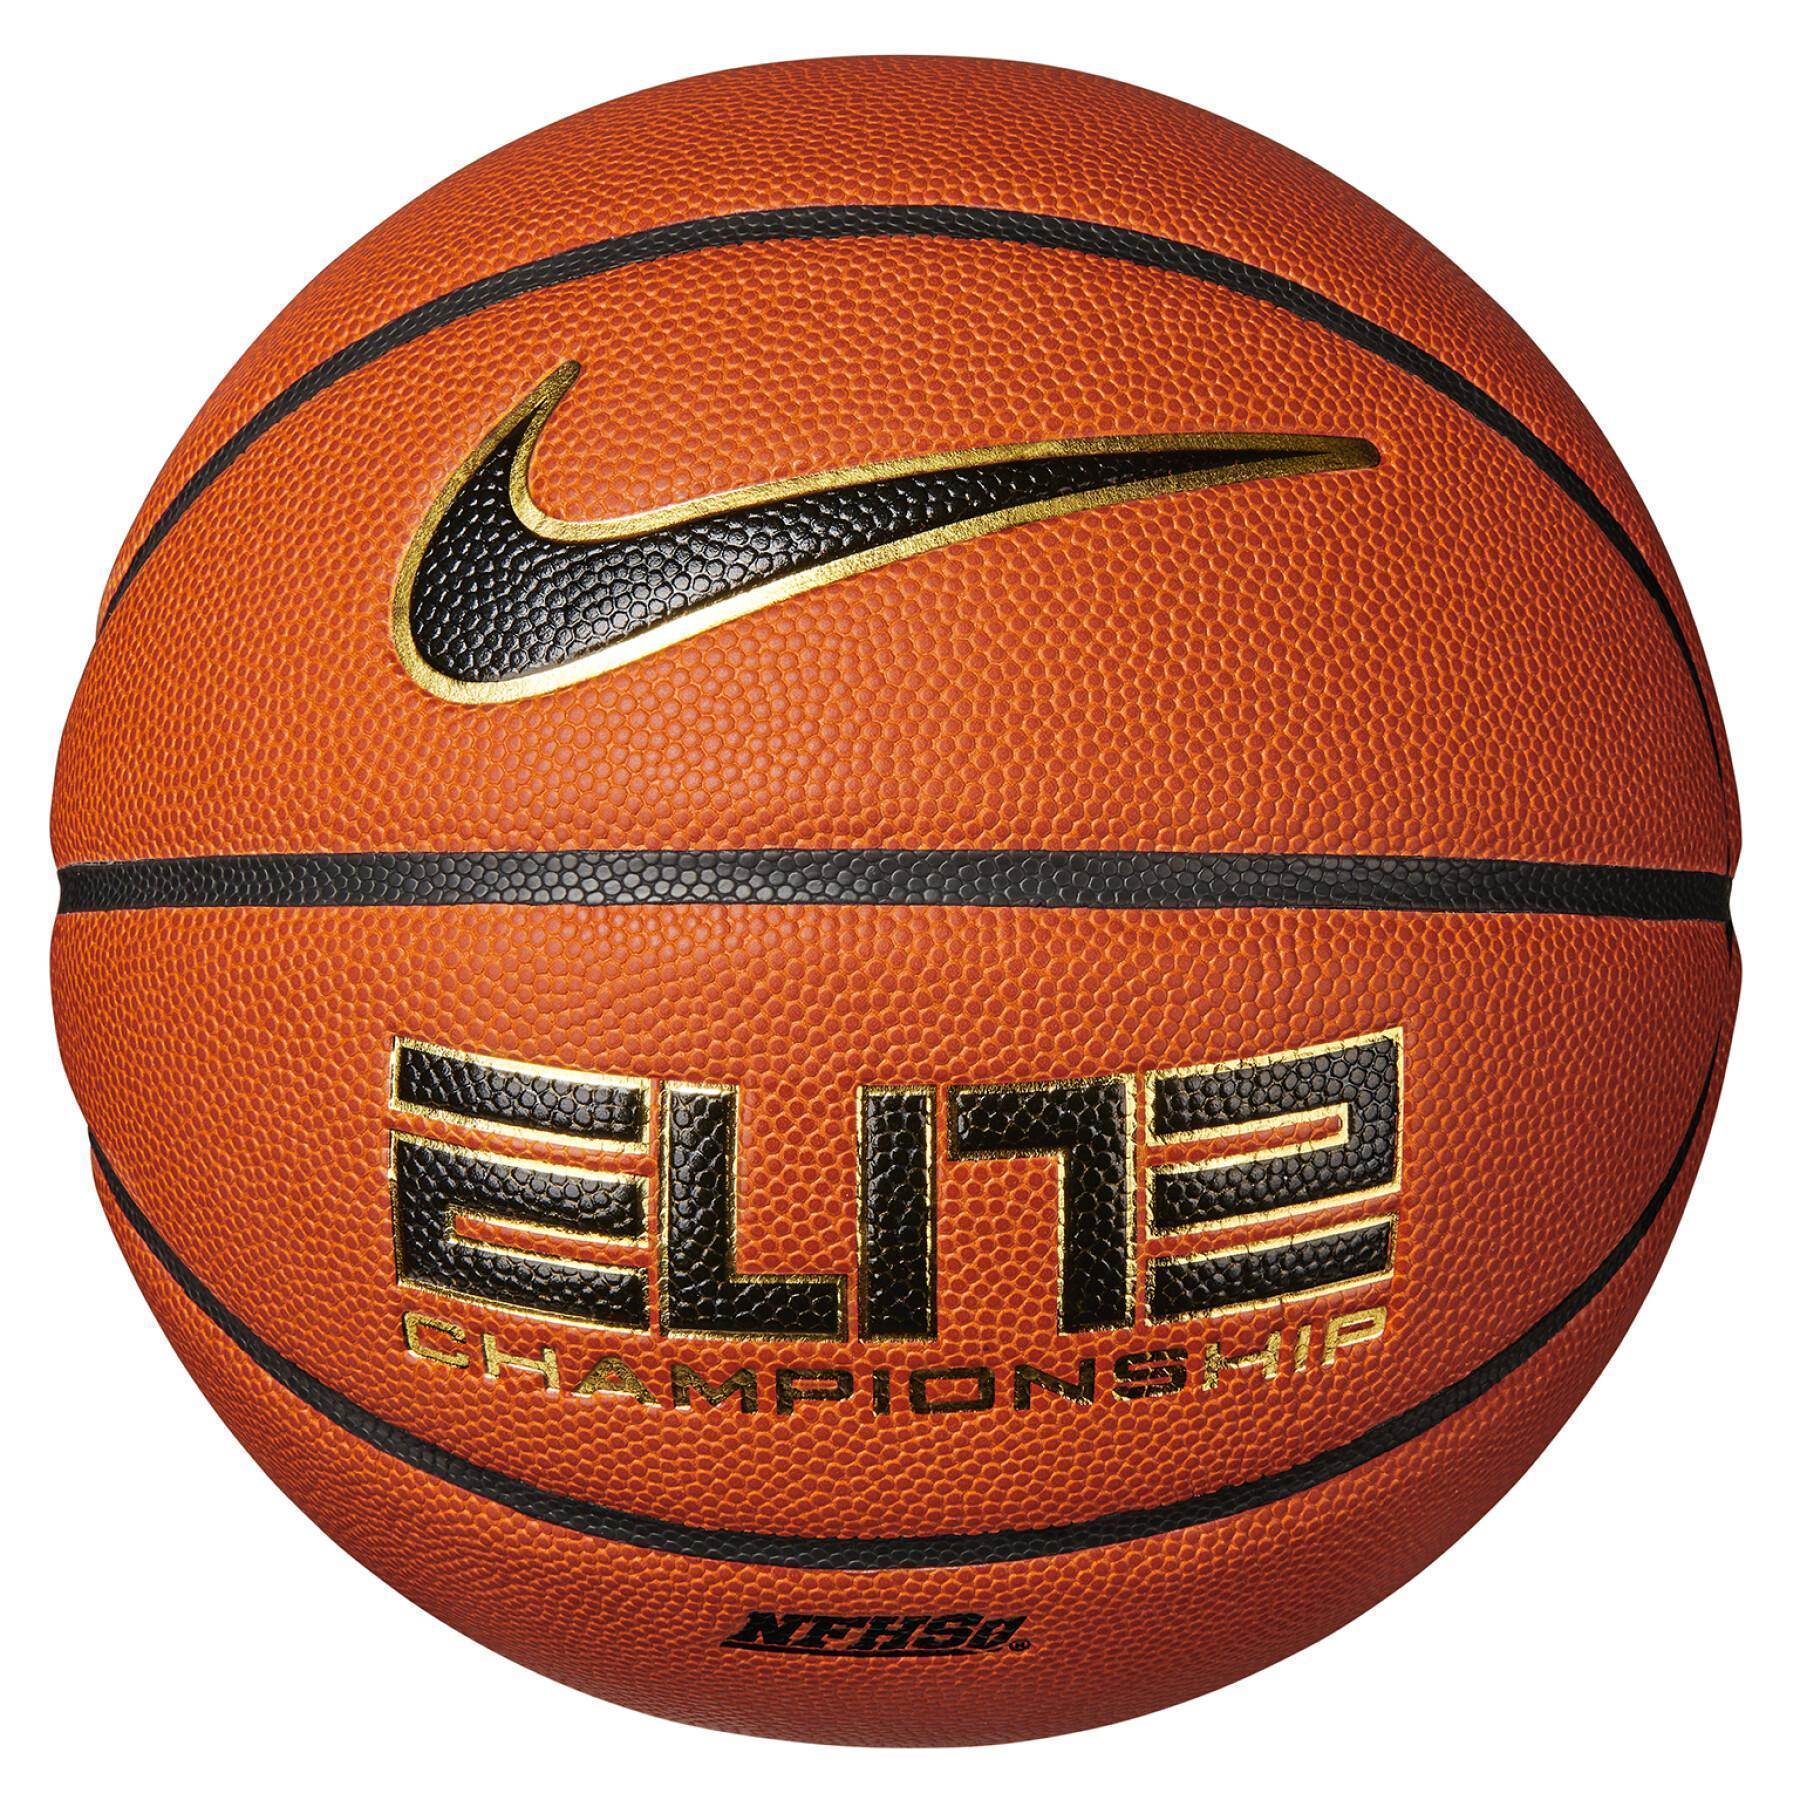 Ballon Nike elite championship 8p 2.0